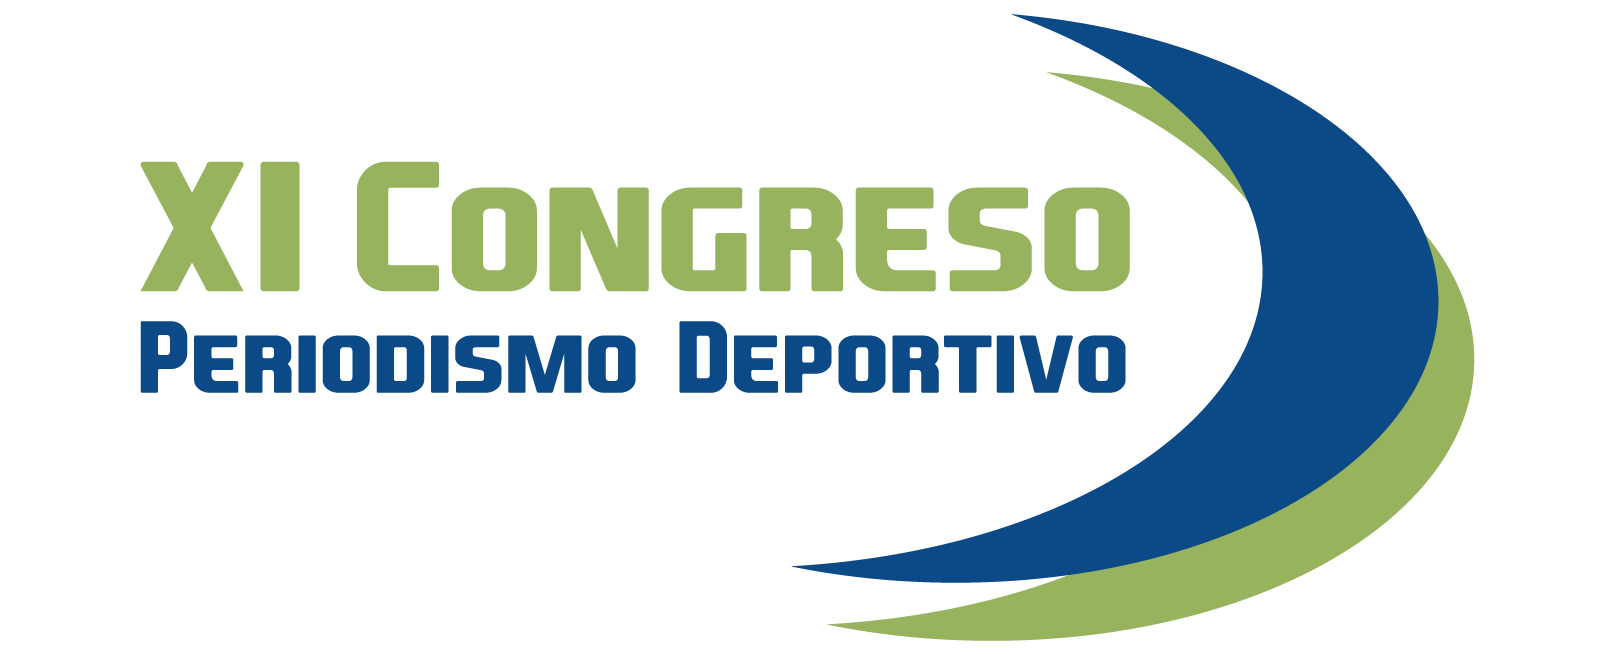 XI Congreso de Periodismo Deportivo